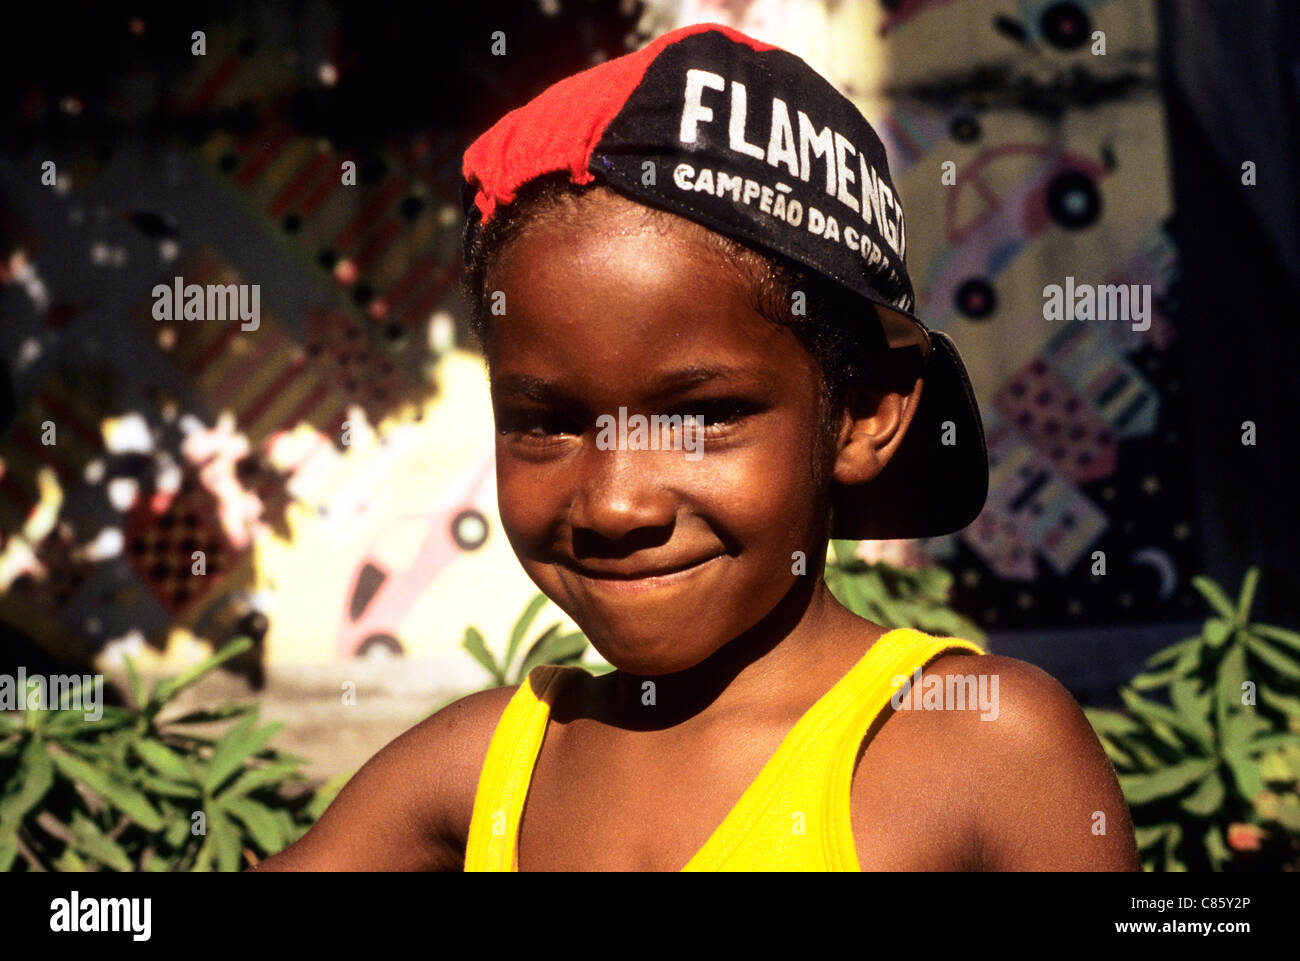 Rio de Janeiro, Brazil. Smiling young boy wearing a Flamengo football team hat and yellow sleeveless t-shirt. Stock Photo